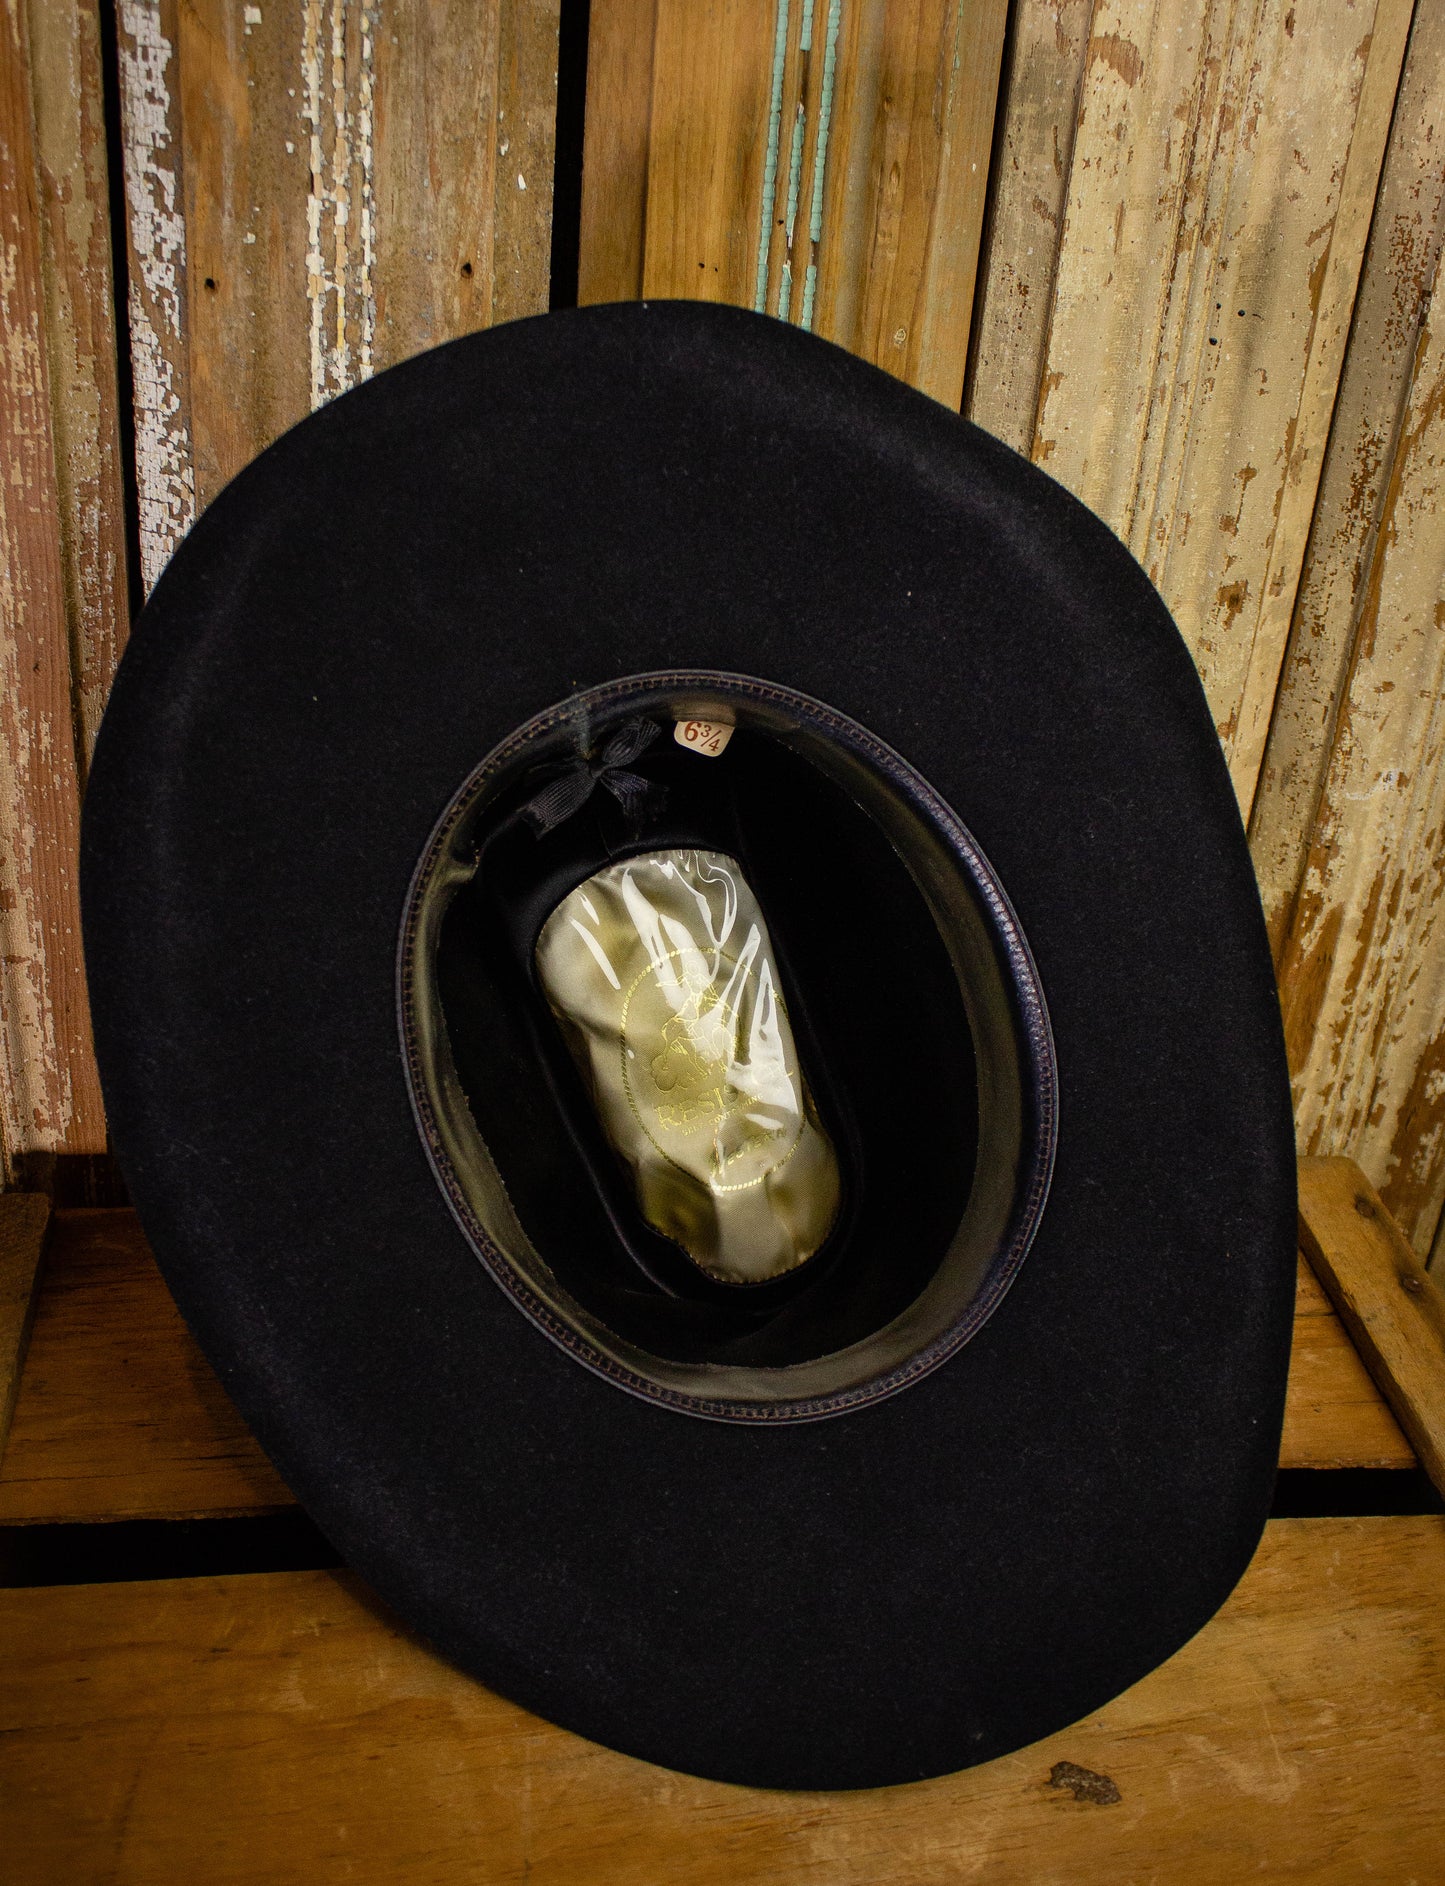 Vintage Black 3X Beaver Resistol Cowboy Hat Black 6 3/4